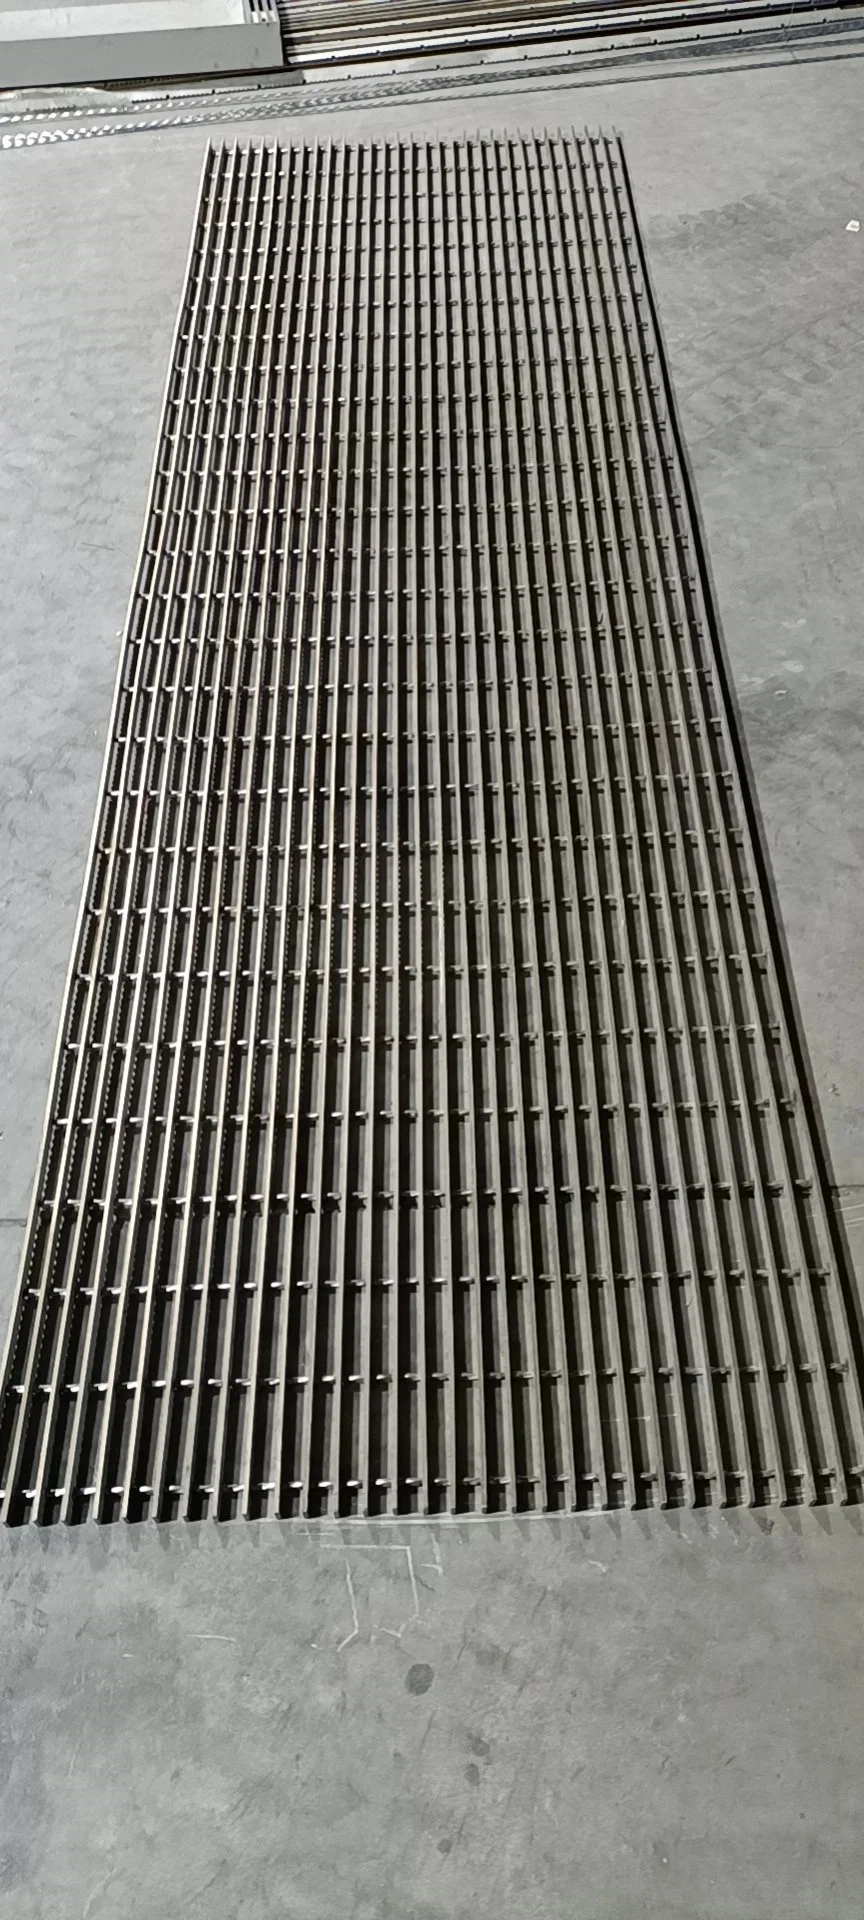 201 304 316 Customized Stainless Floor Grate Panel Catwalk Steel Grating Walkway Platform